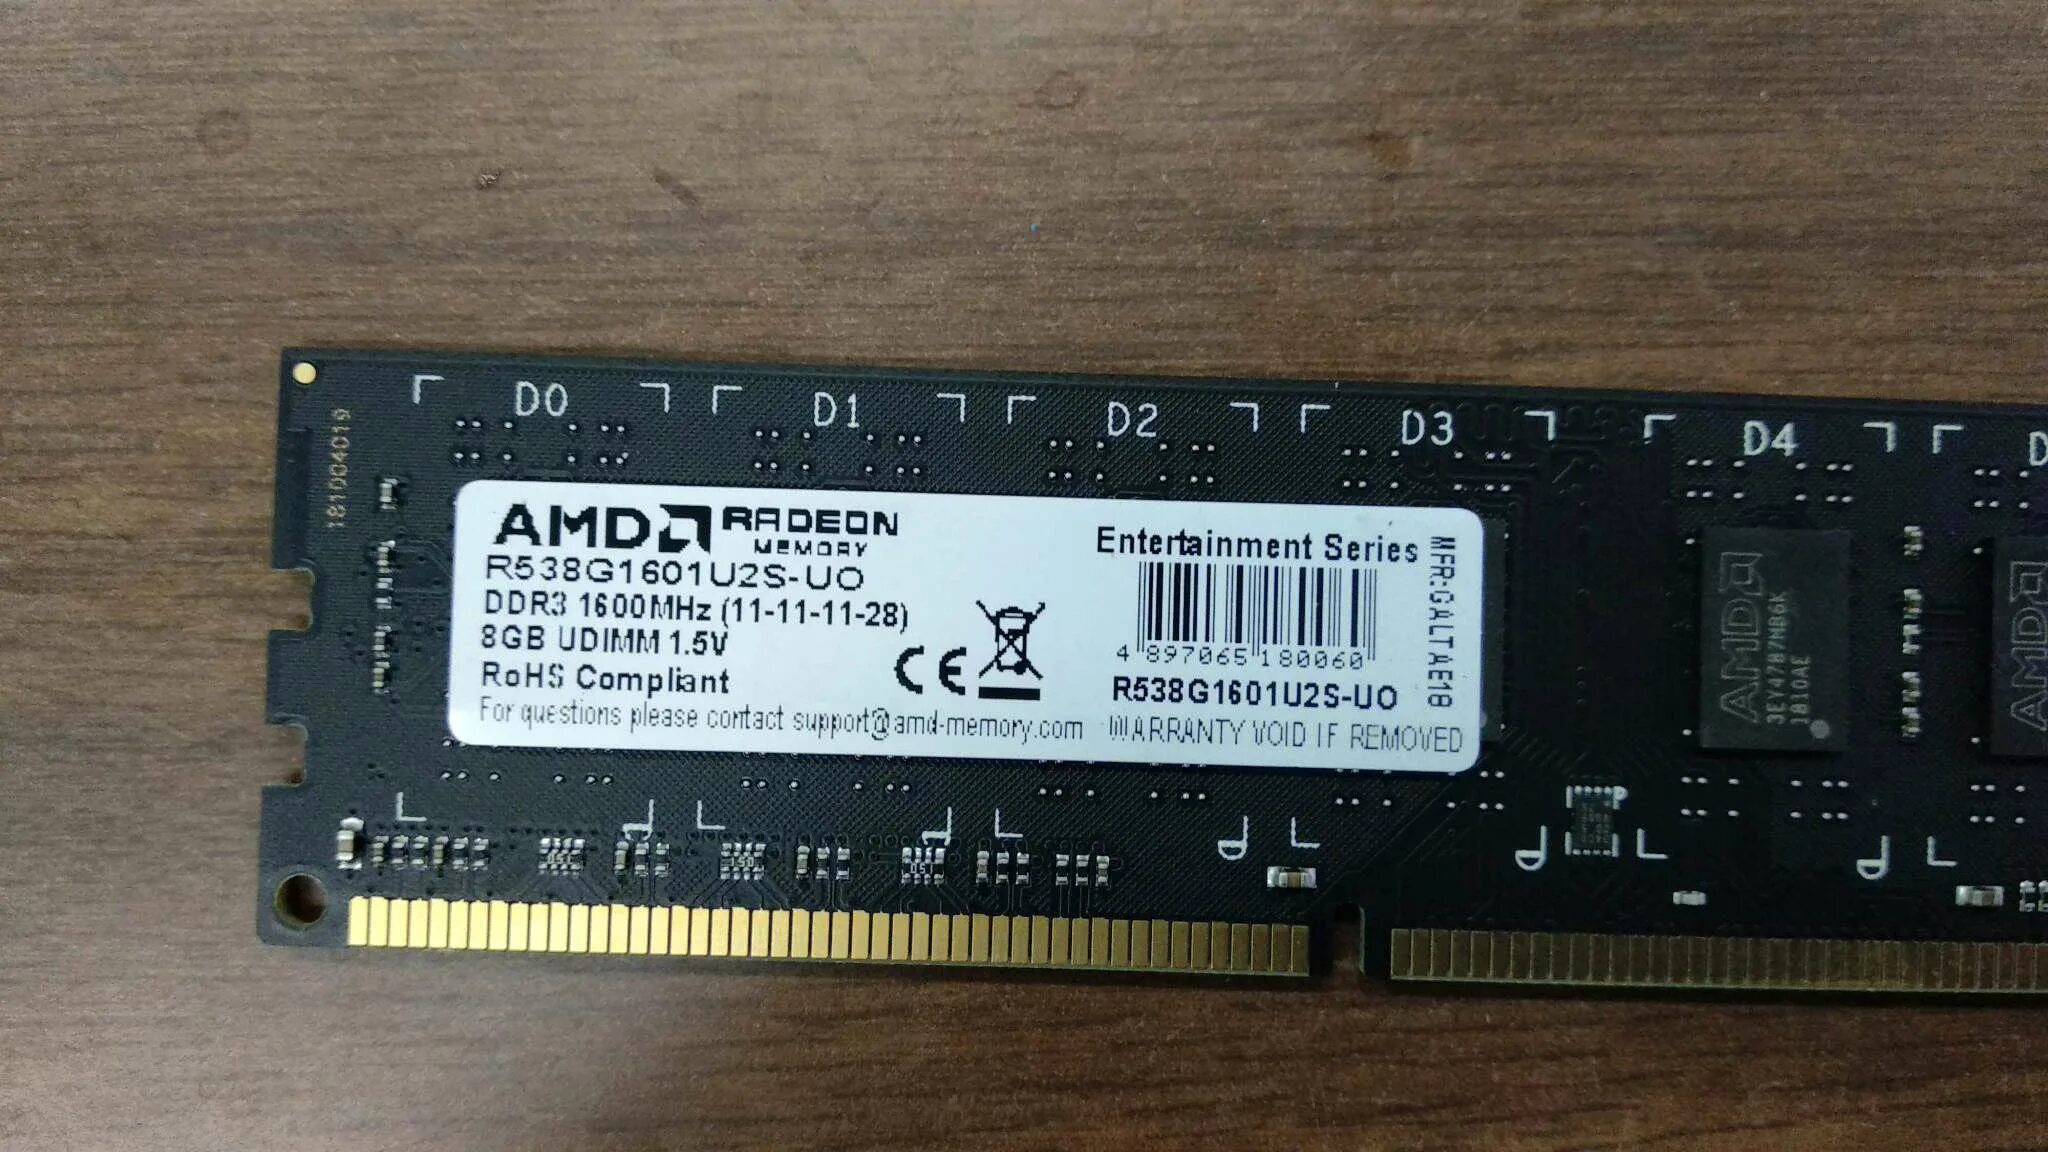 Amd 4 series. Оперативная память AMD so-DIMM ddr3l 8gb 1600mhz PC-12800 (r538g1601s2sl-u) Ret. Оперативная память AMD ddr3 8gb 1600mhz. Оперативная память ddr3 AMD 8gb. Оперативная память АМД 8 ГБ ддр3.